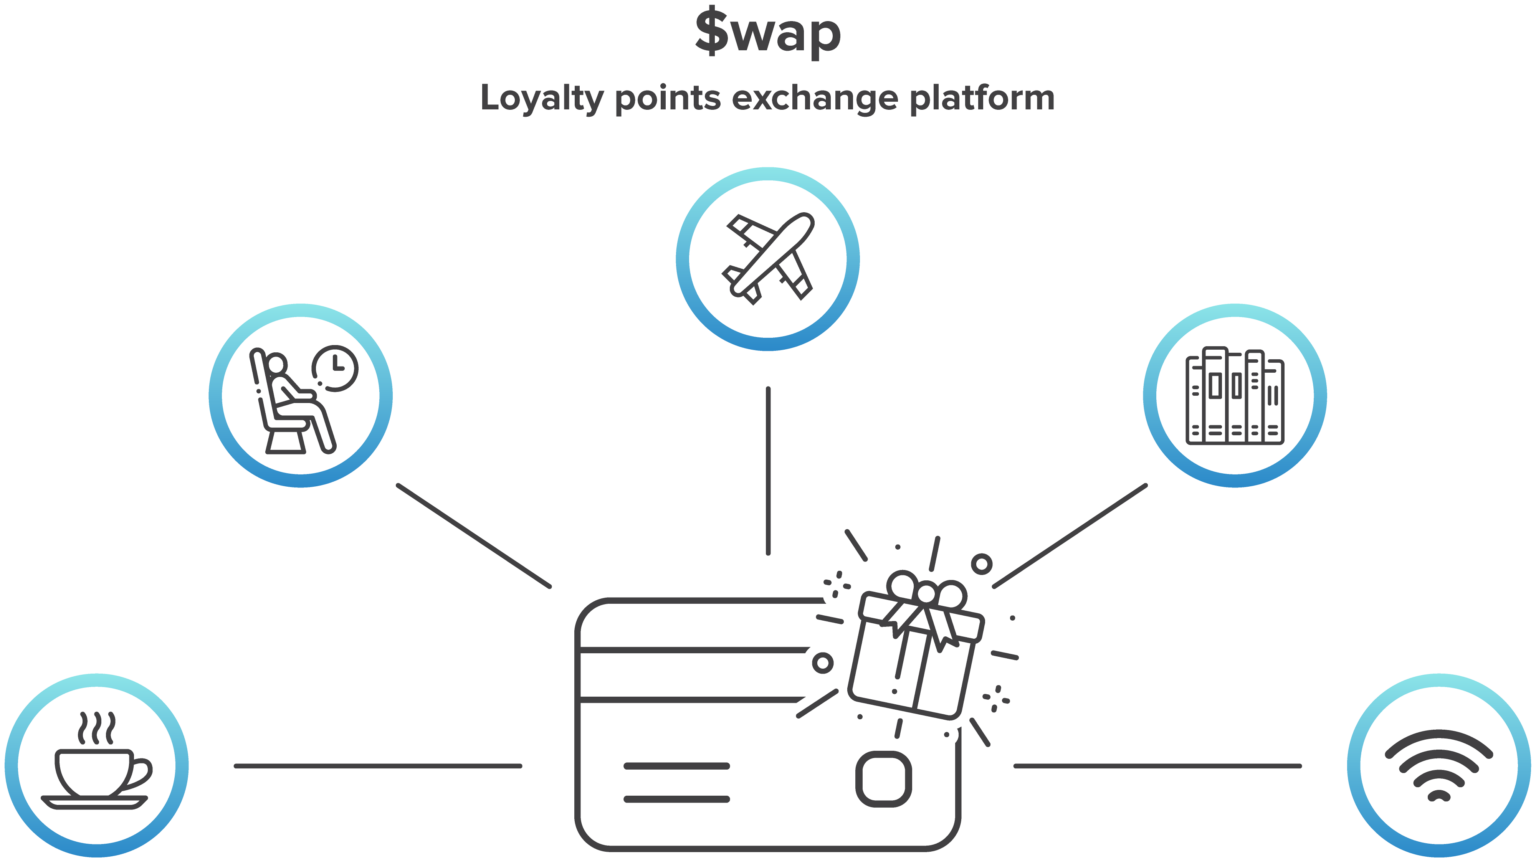 Loyalty Program Management Platform Developed with Hyperledger by Mindtree